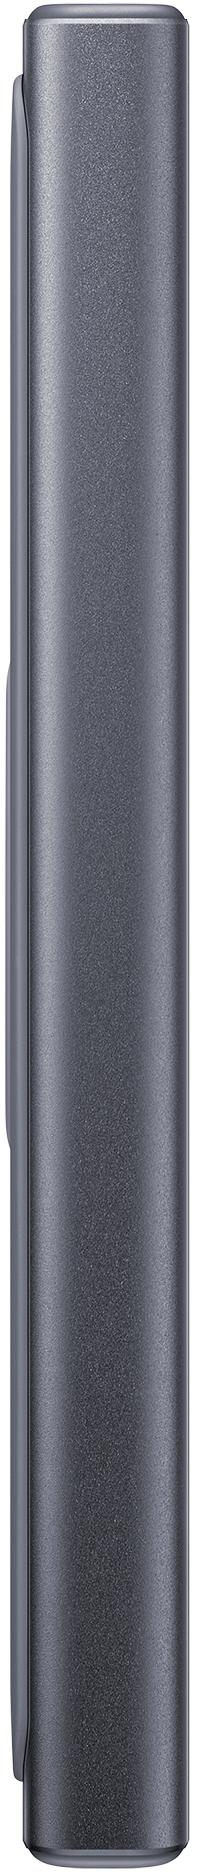 Samsung - Powerbank Samsung EB-P1100 (10.000 mAh - USB-C - Cinzento)